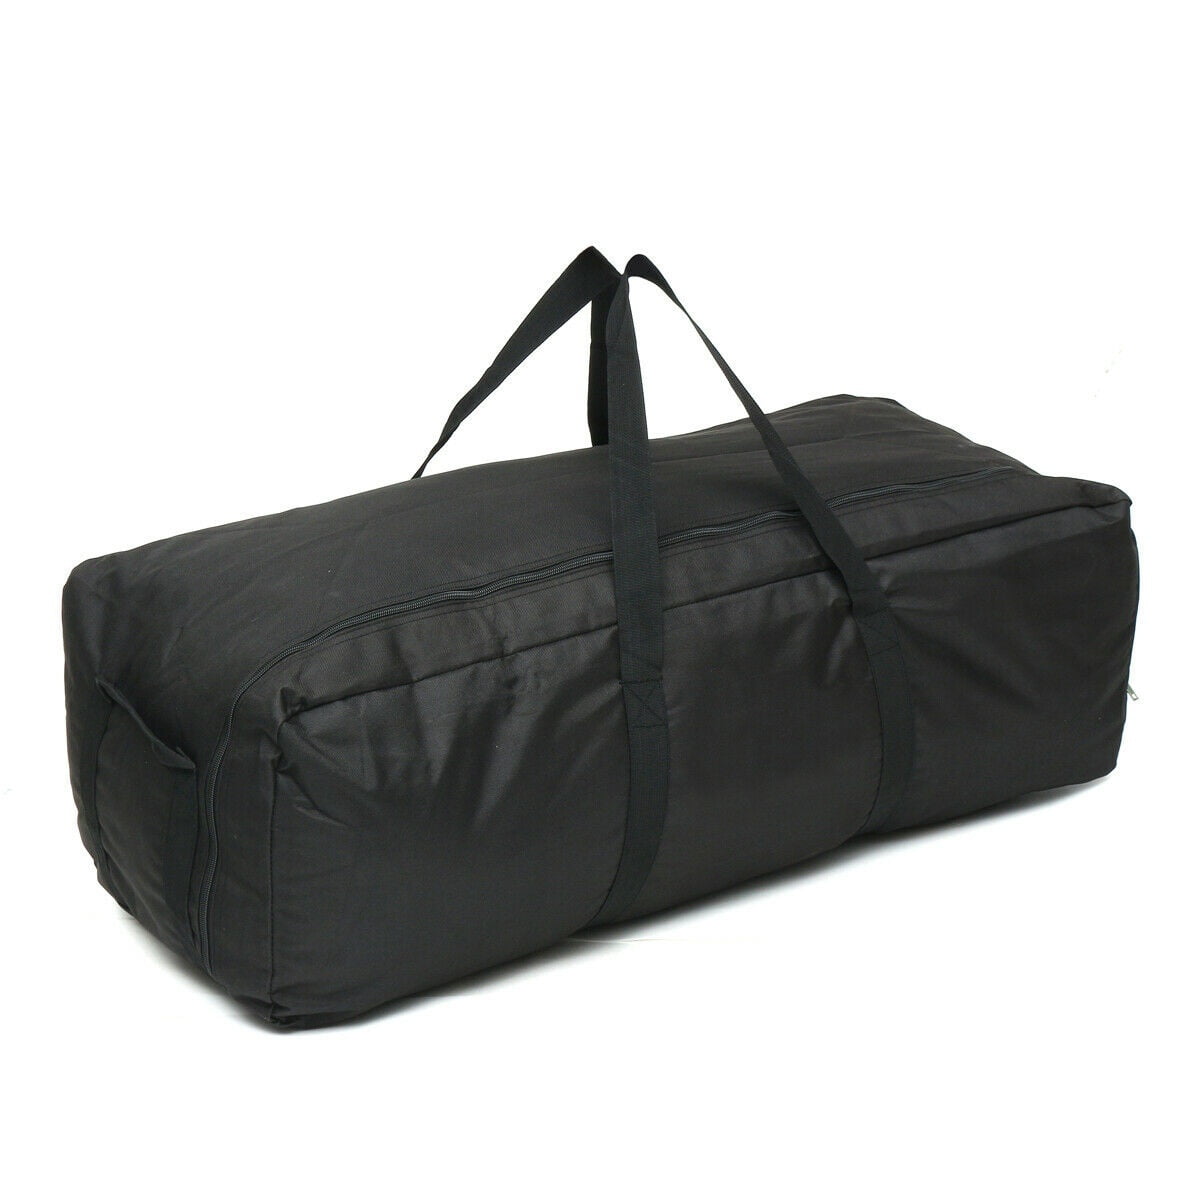 Yiuswoy Large Luggage bag Sports Gym bag Oxford Travel Duffel Bag for Women Men